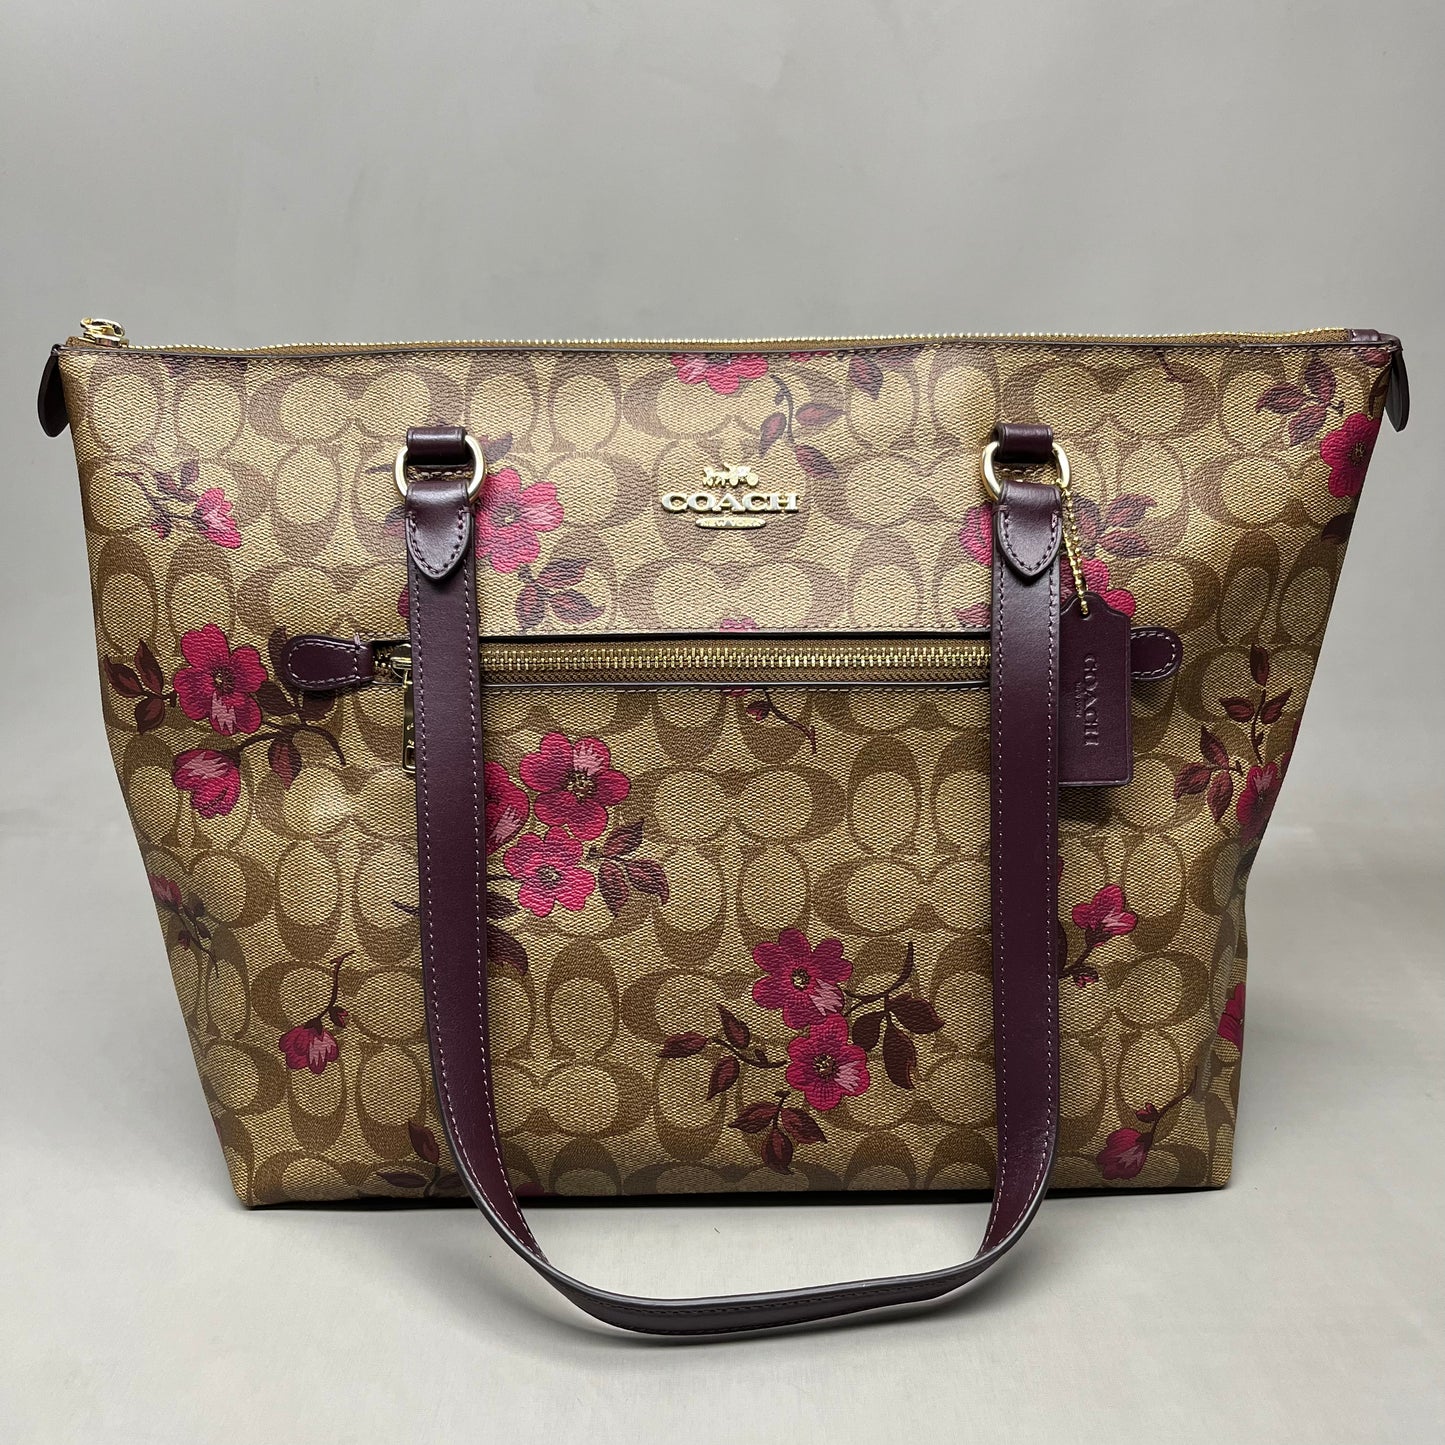 COACH Gallery Shoulder Khaki Tote Bag With Berri Multi Victorian floral Print F88876 (New)